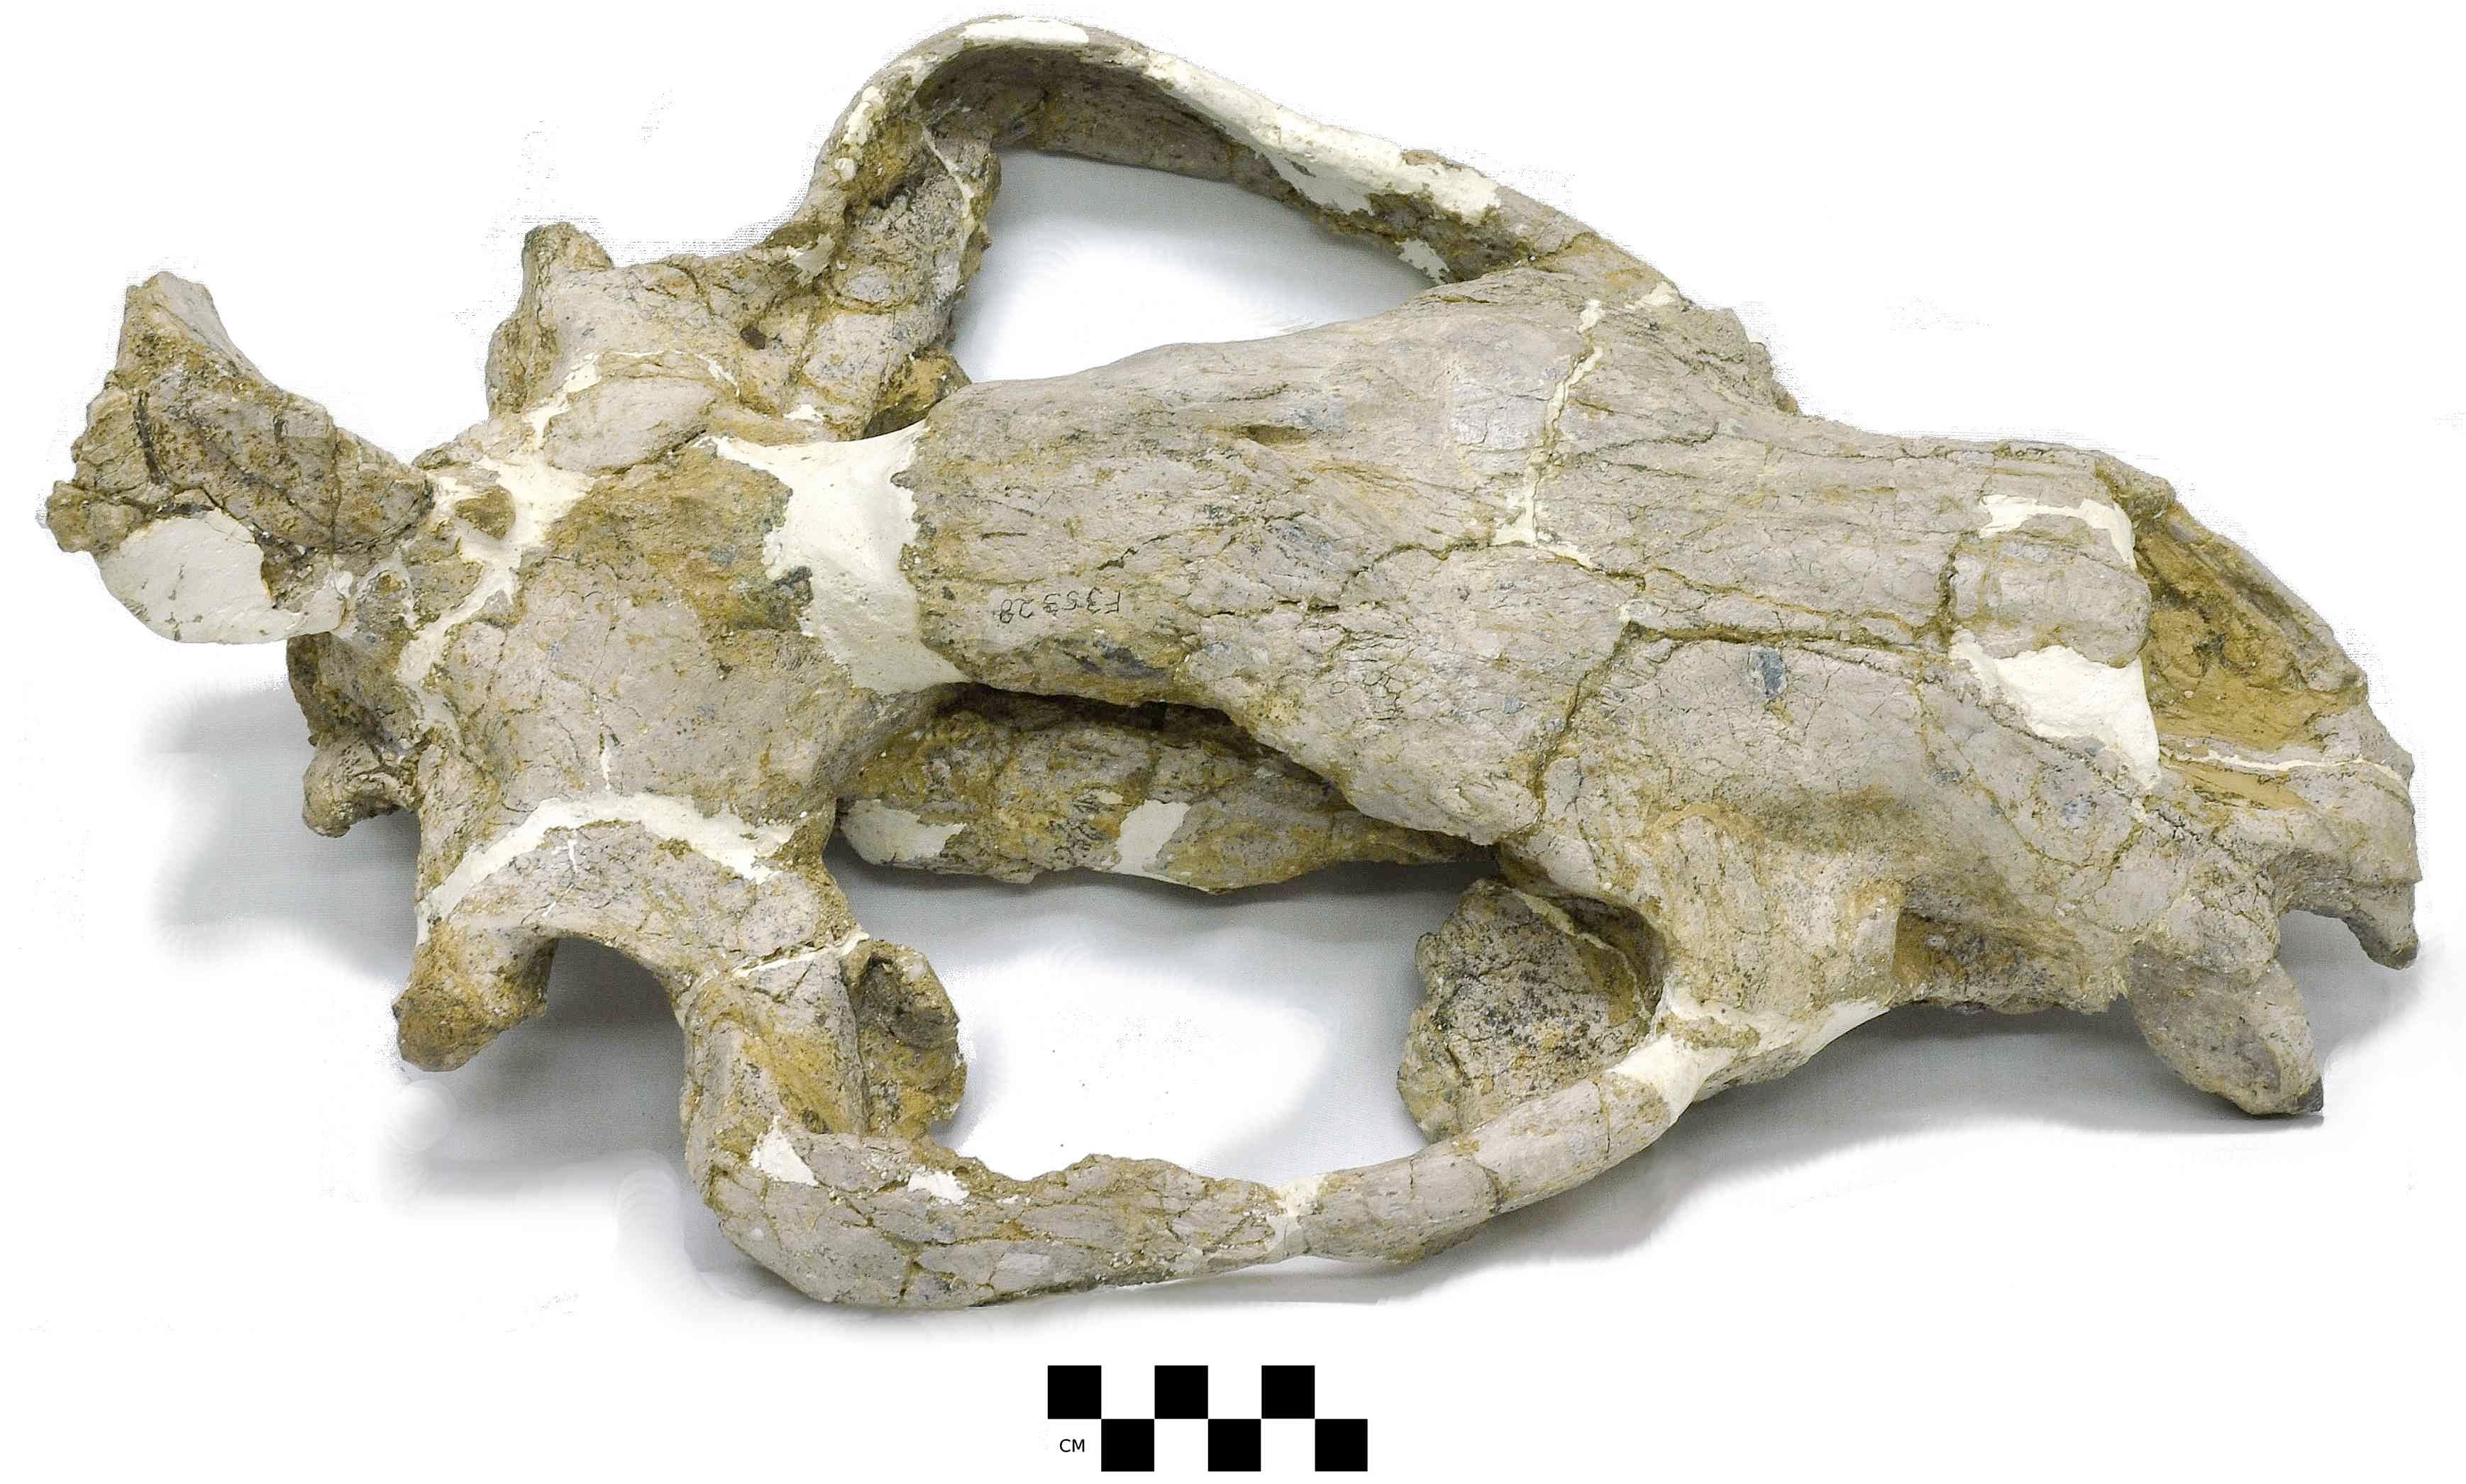 Fossil type specimens